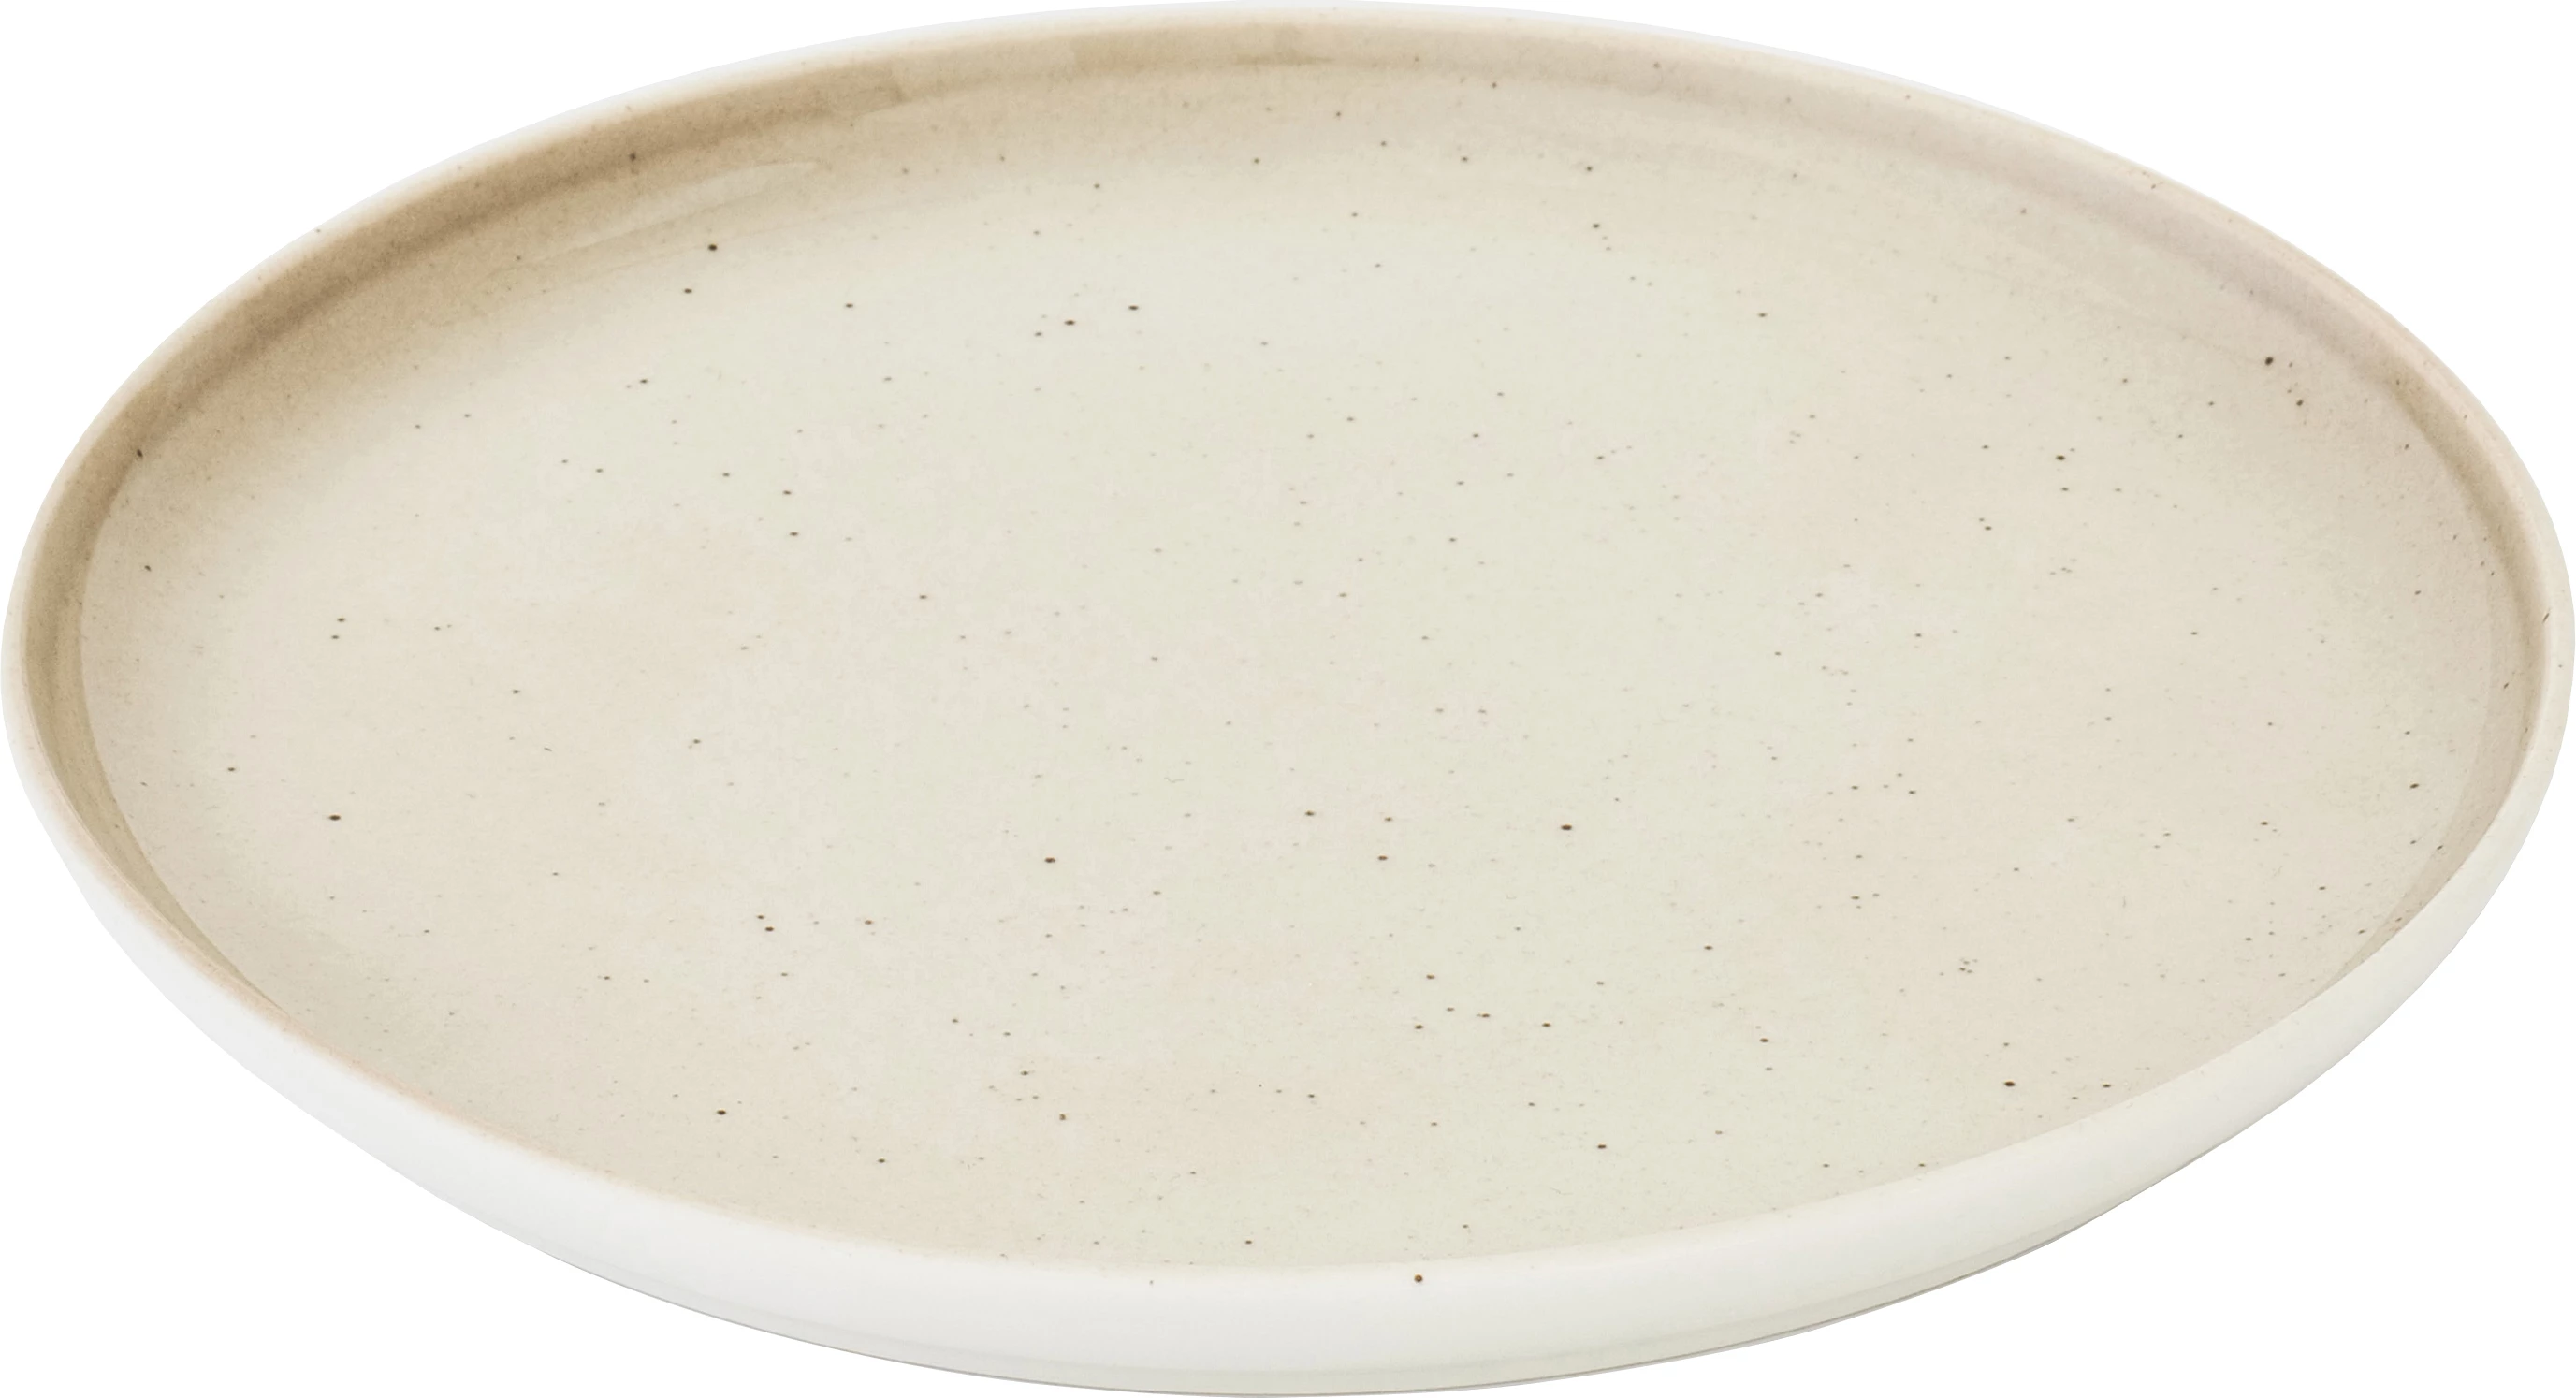 Figgjo Ela tallerken, uden fane, sand, ø20 cm